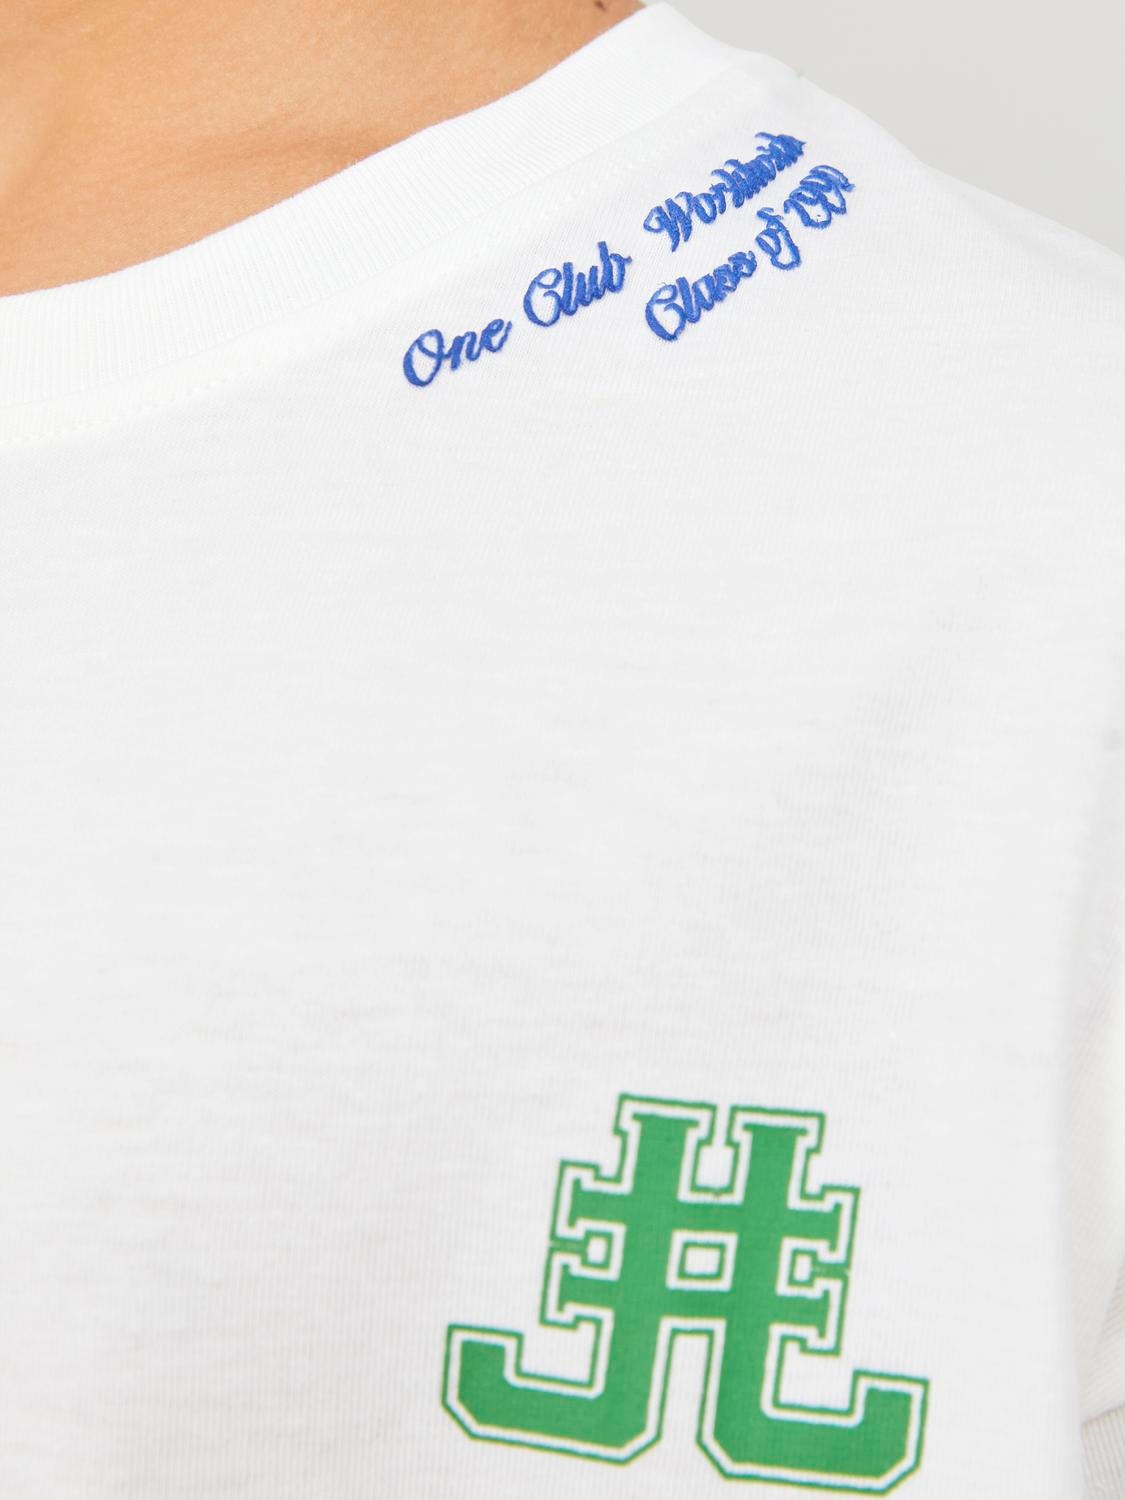 Jack & Jones Camiseta Estampado Bebés -Cloud Dancer - 12257431